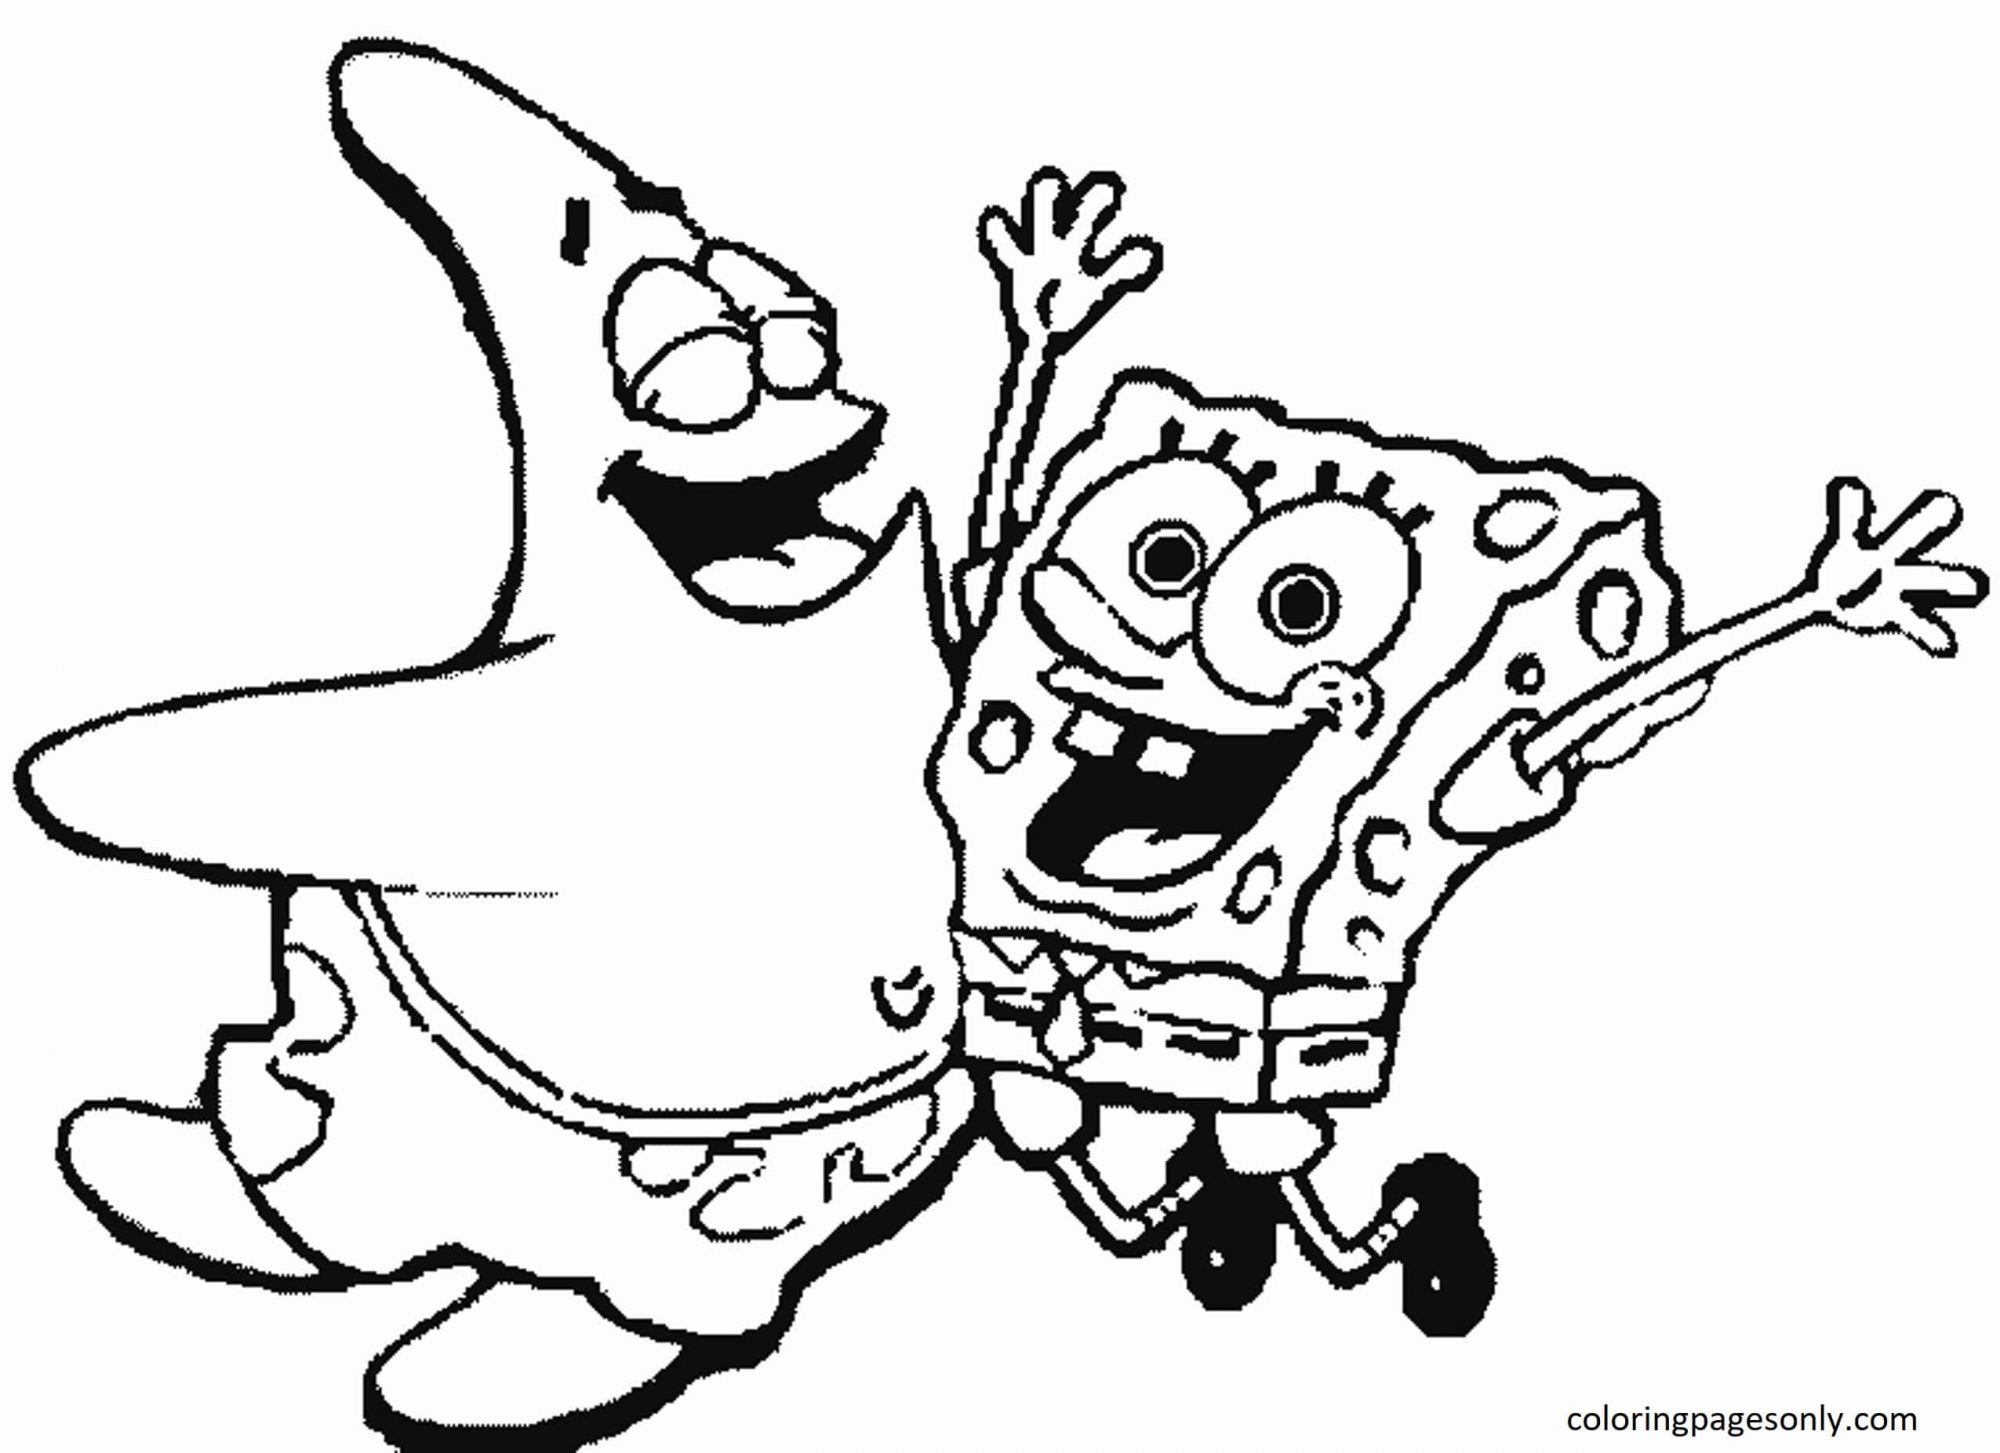 Spongebob And Patrick 2 Coloring Page